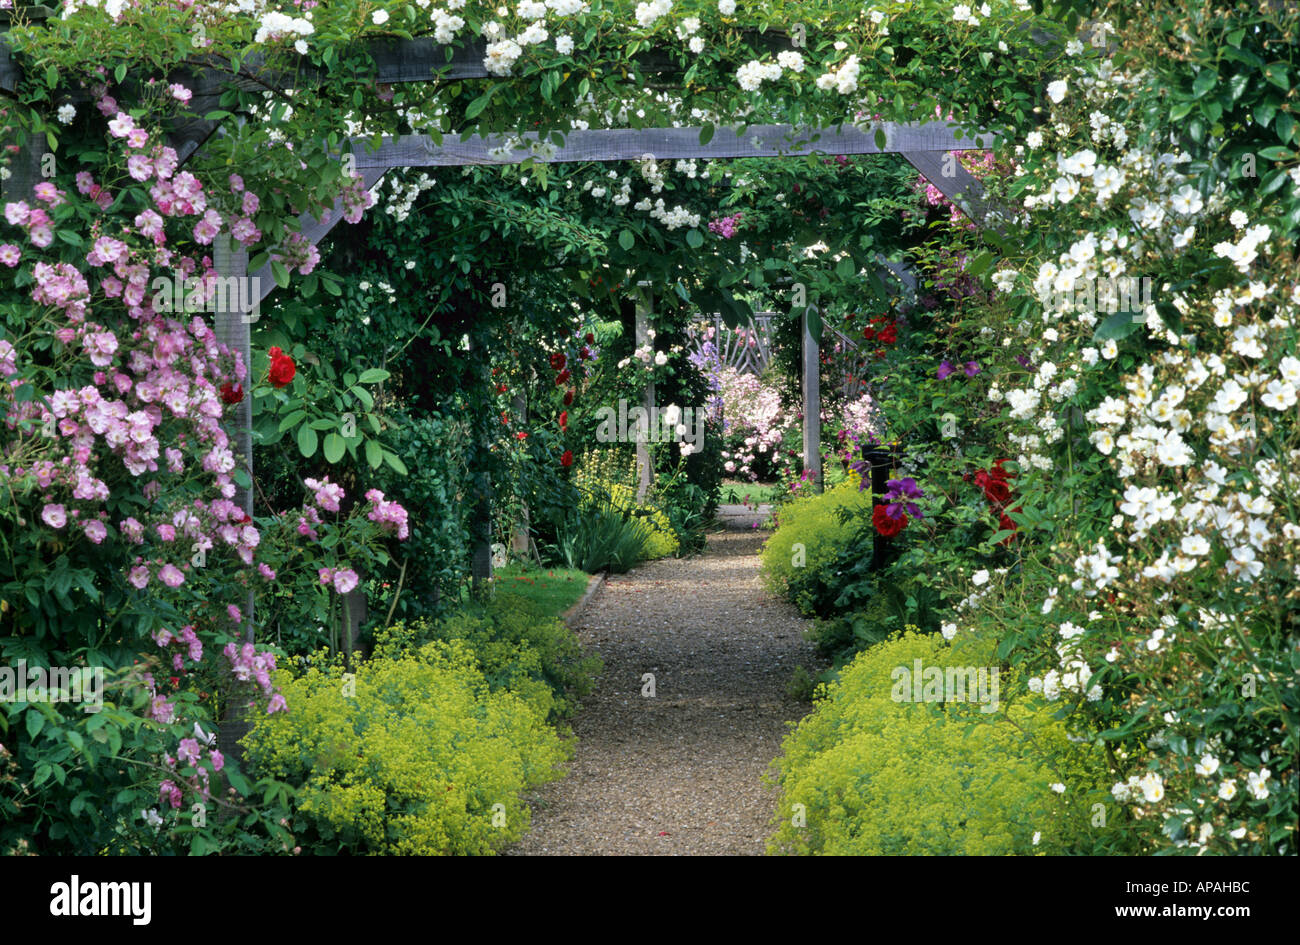 Mannington Hall, Norfolk, Rose Arbour, wooden garden Arch, Alchemilla mollis, climbing plants, pink, white flowers, covered path Stock Photo